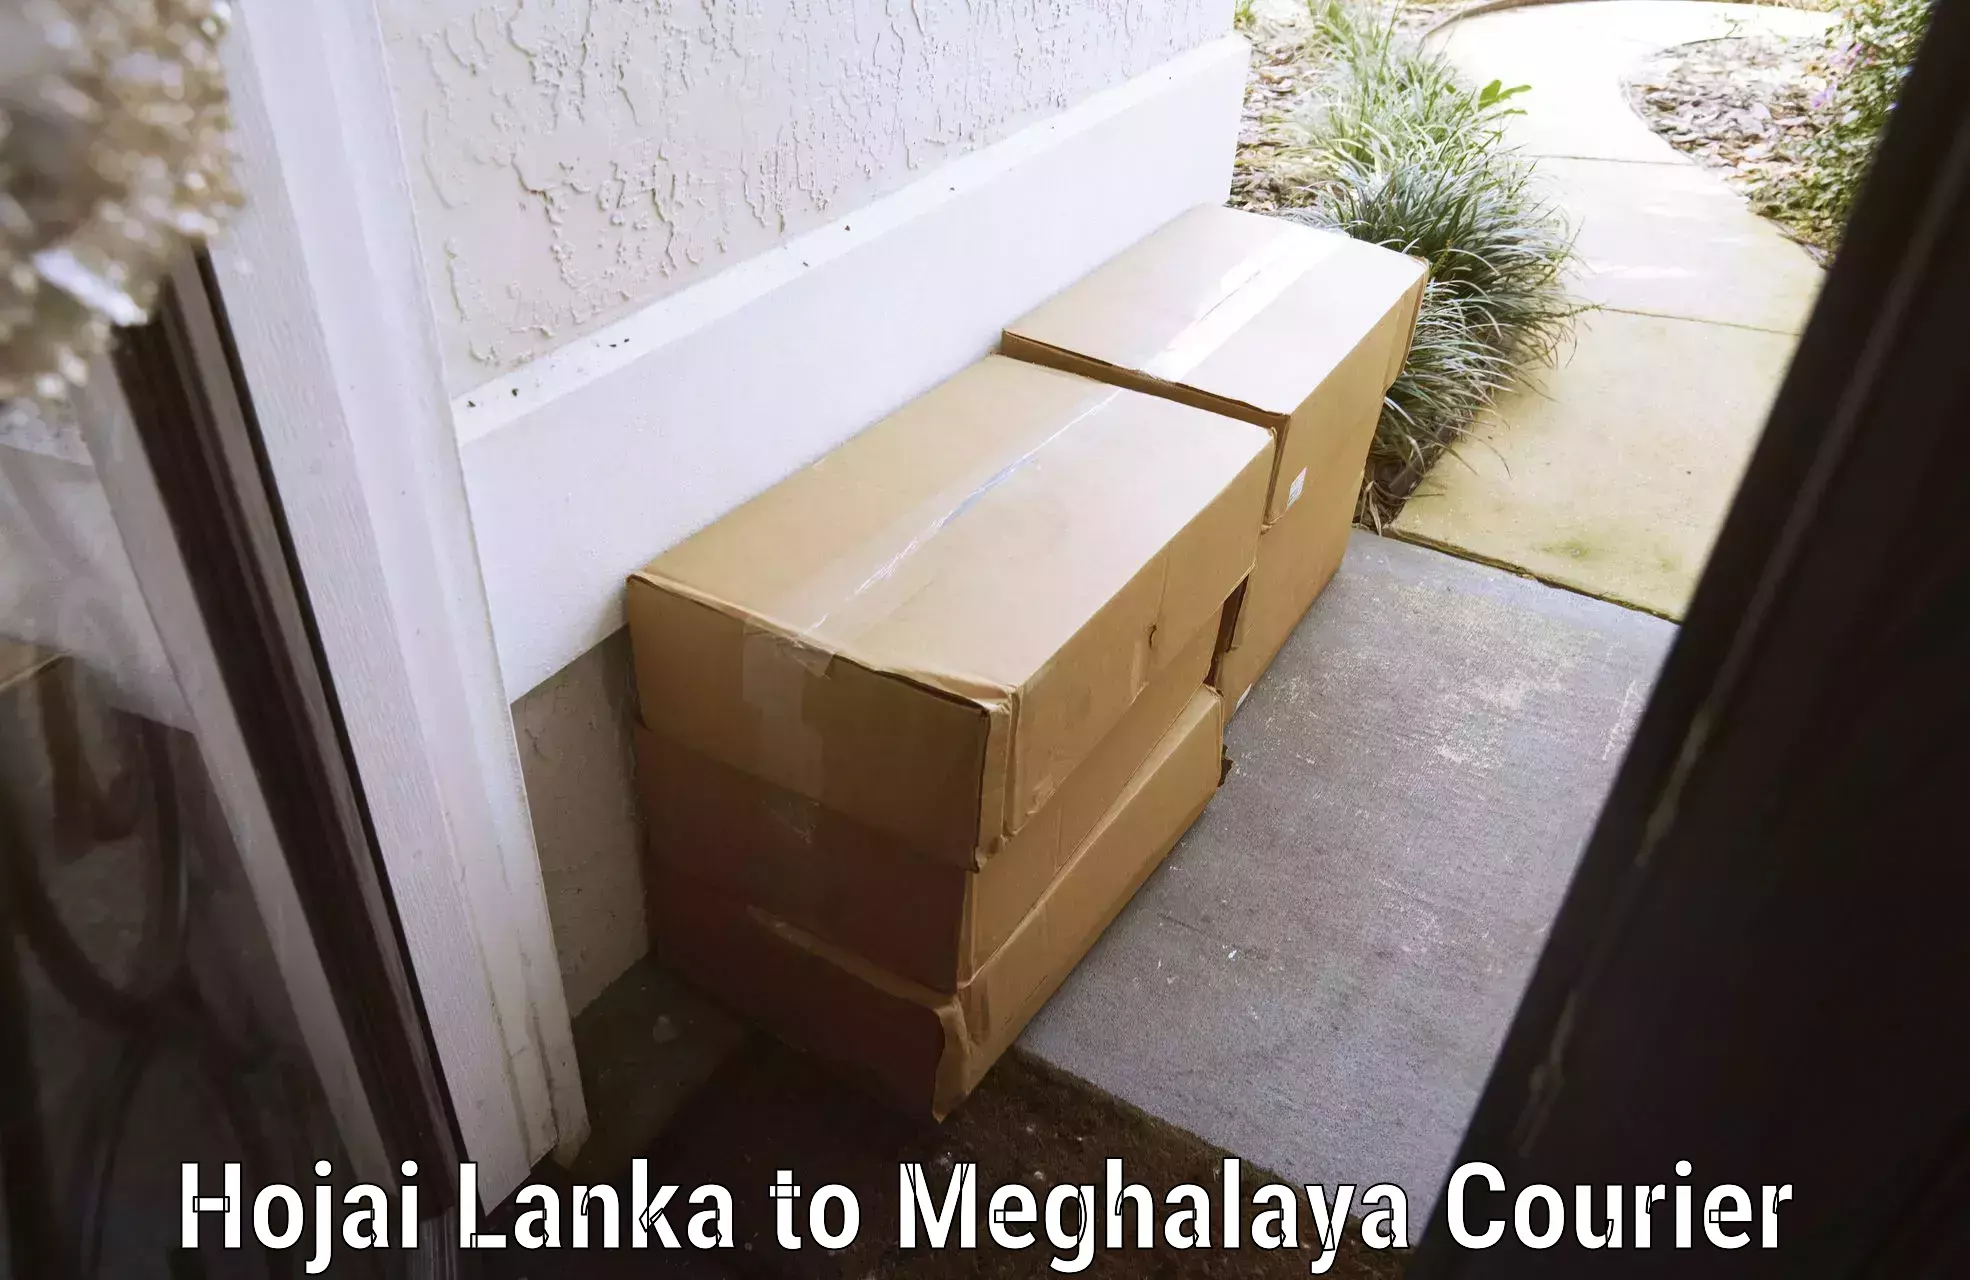 Emergency baggage service Hojai Lanka to Meghalaya